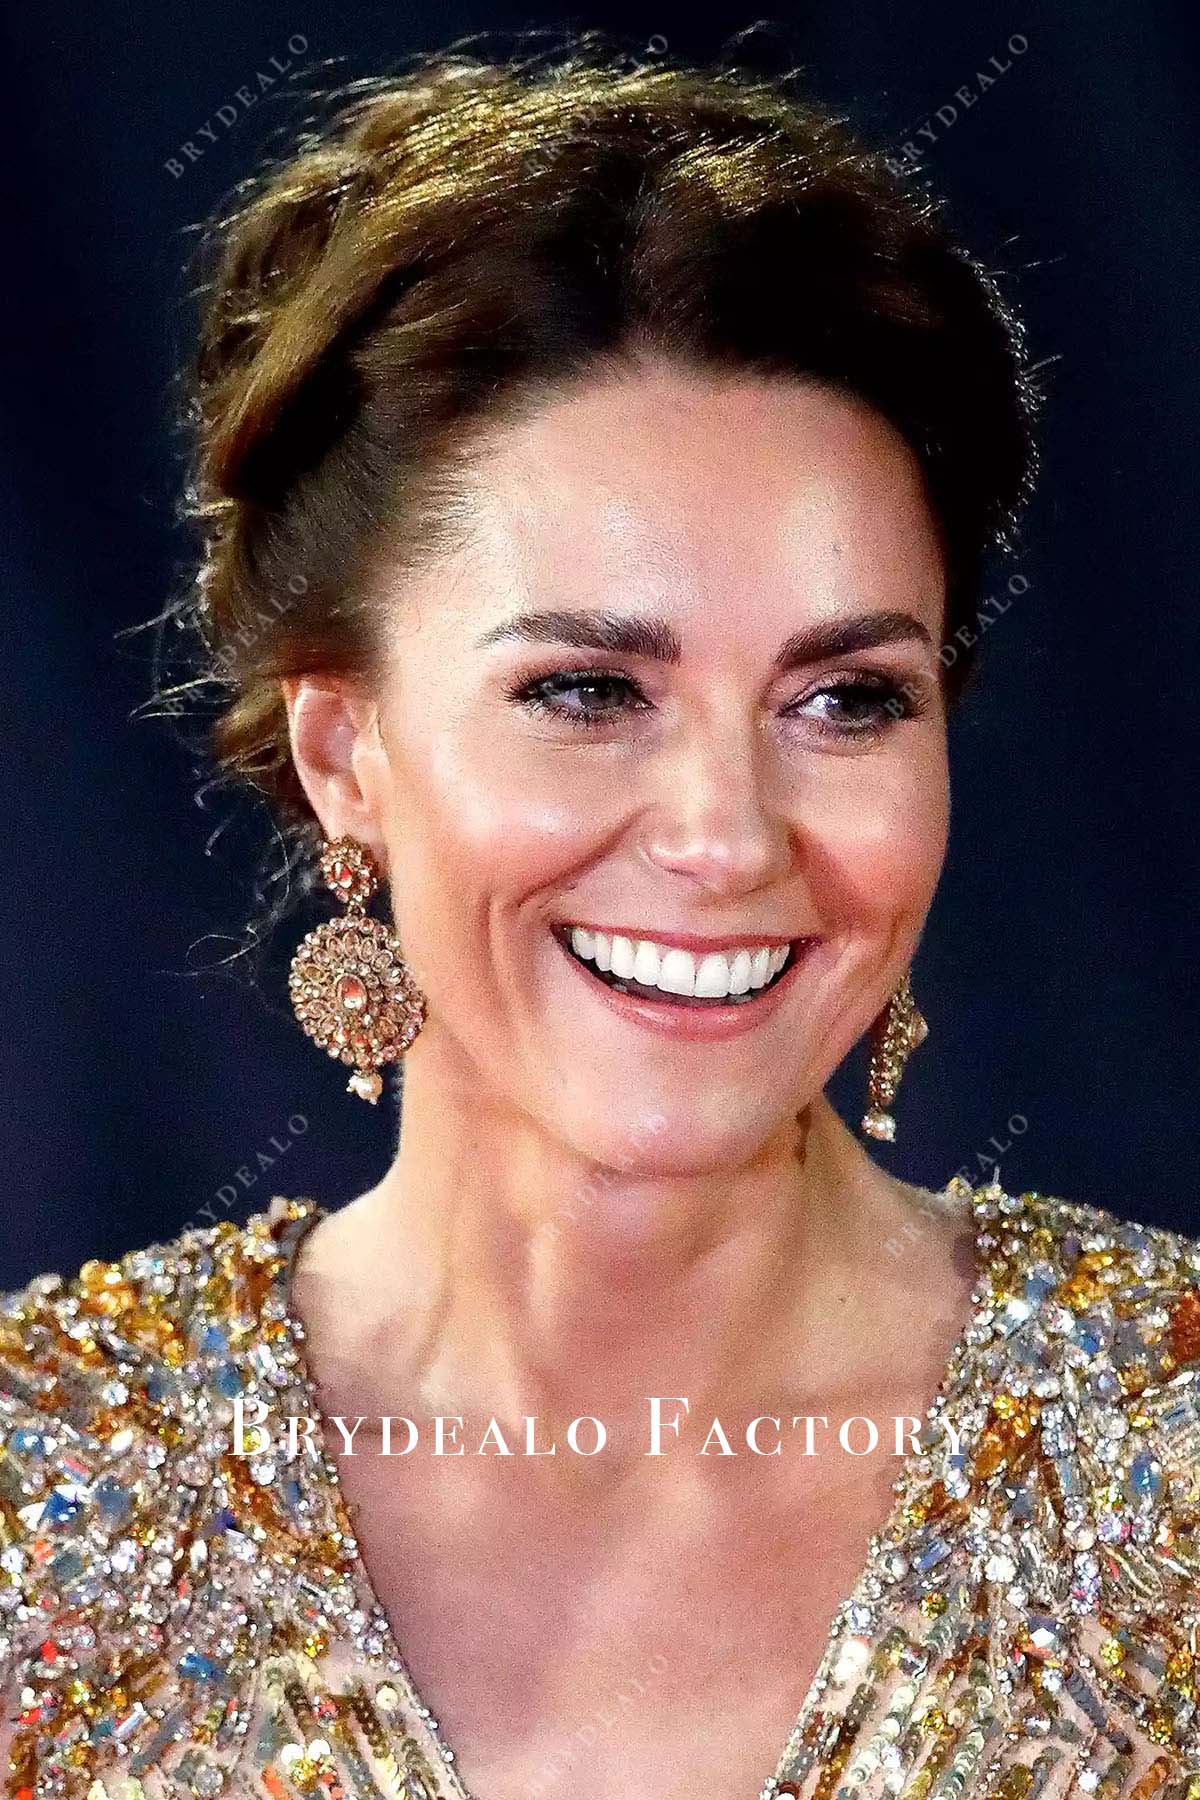 Kate Middleton Gold Sparkly V-neck Dress No Time to Die Premiere